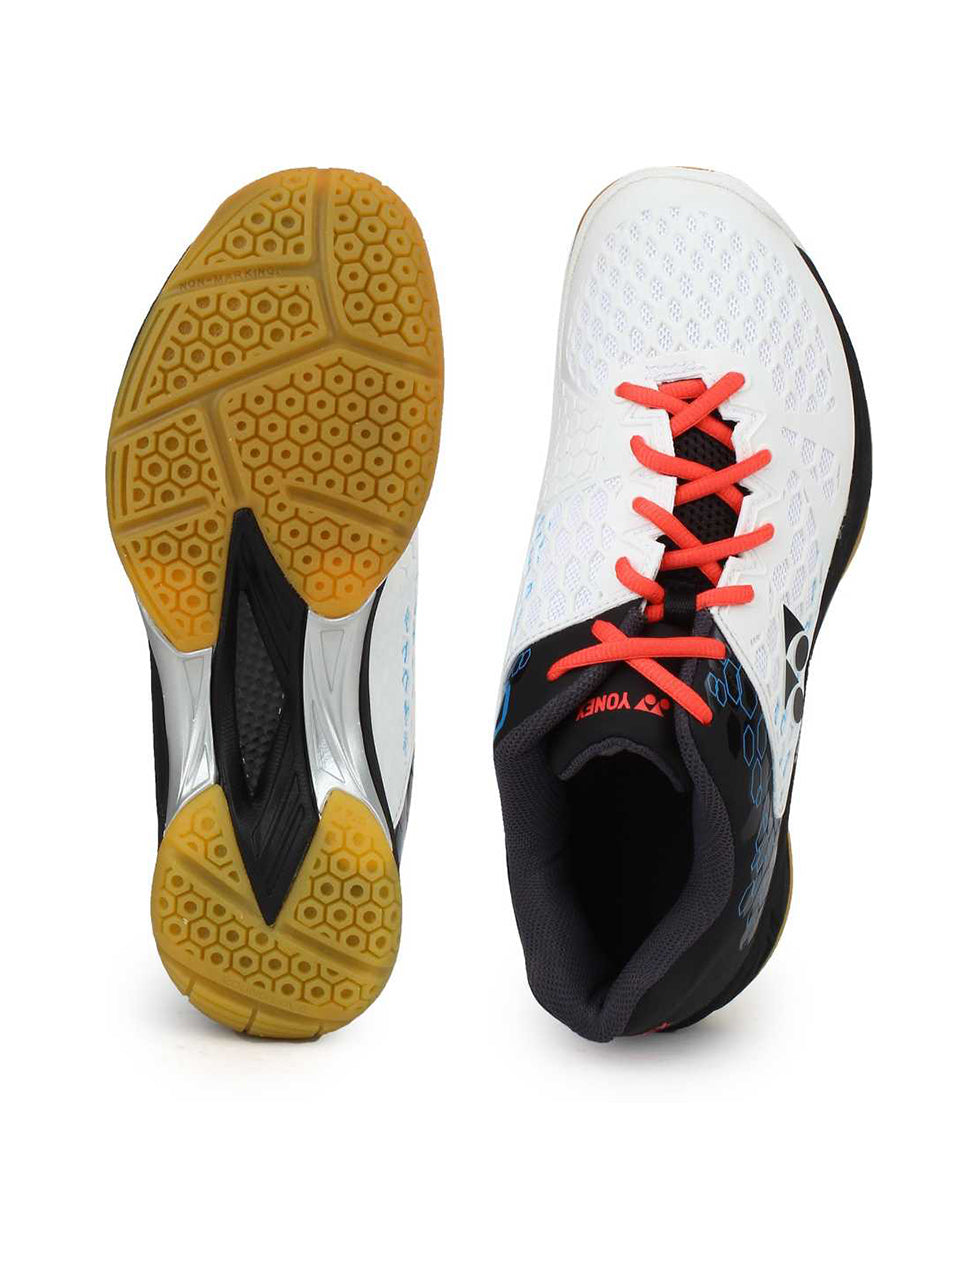 YONEX  Badminton Shoes SHB03EX - Black /  White - Available Size - EU 35 / 36 /  45.5